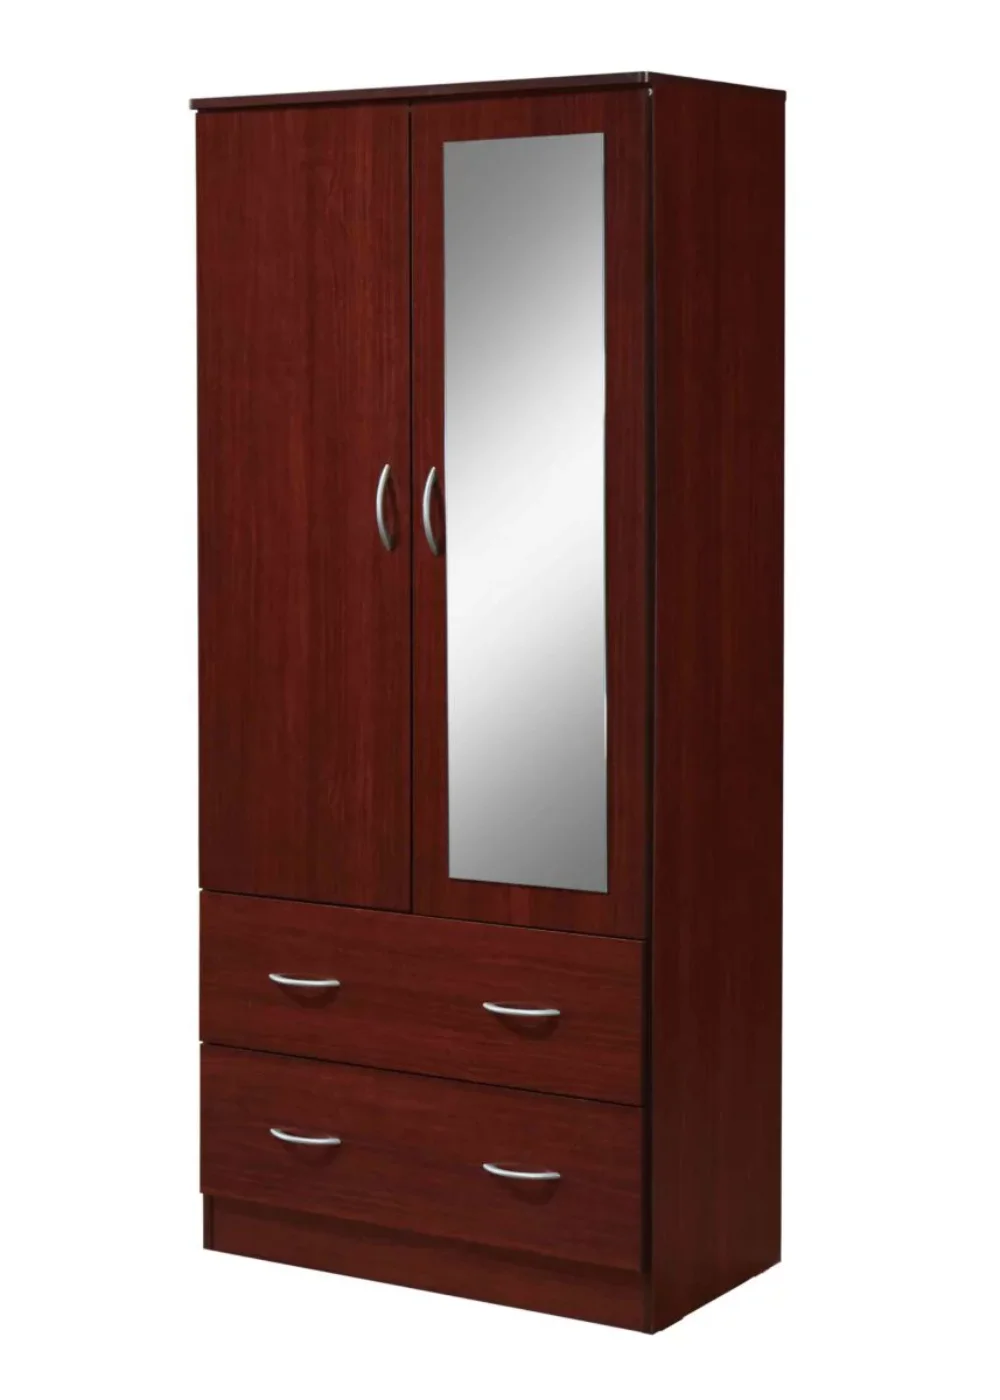 

Hodedah Two Door Wardrobe with Two Drawers and Hanging Rod plus Mirror, Mahogany portable closet wardrobe